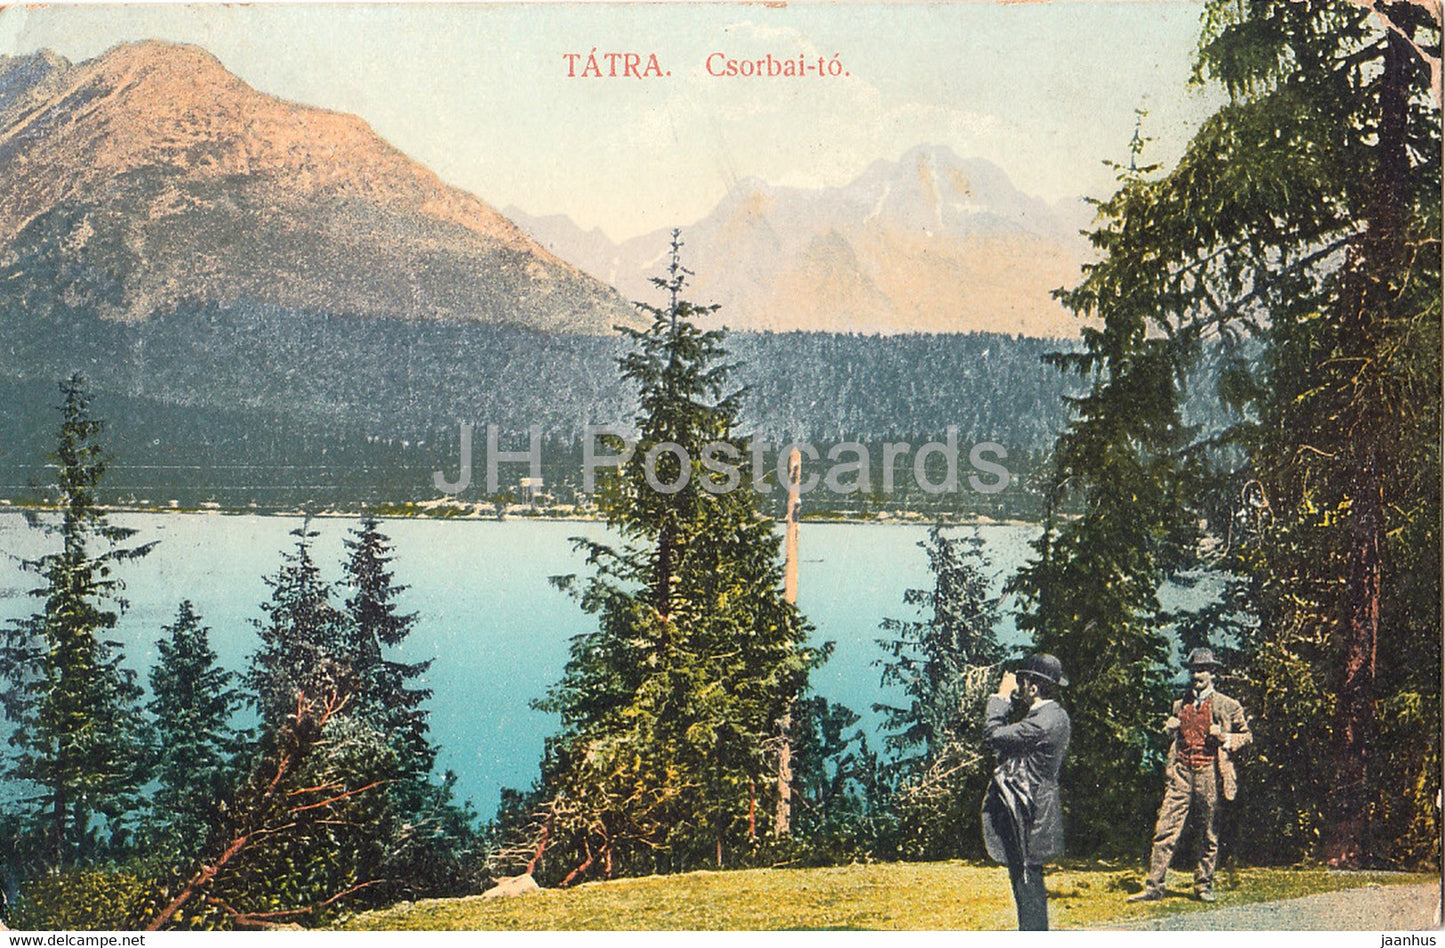 Tatra - Csorbai to - old postcard - 1912 - Slovakia - used - JH Postcards